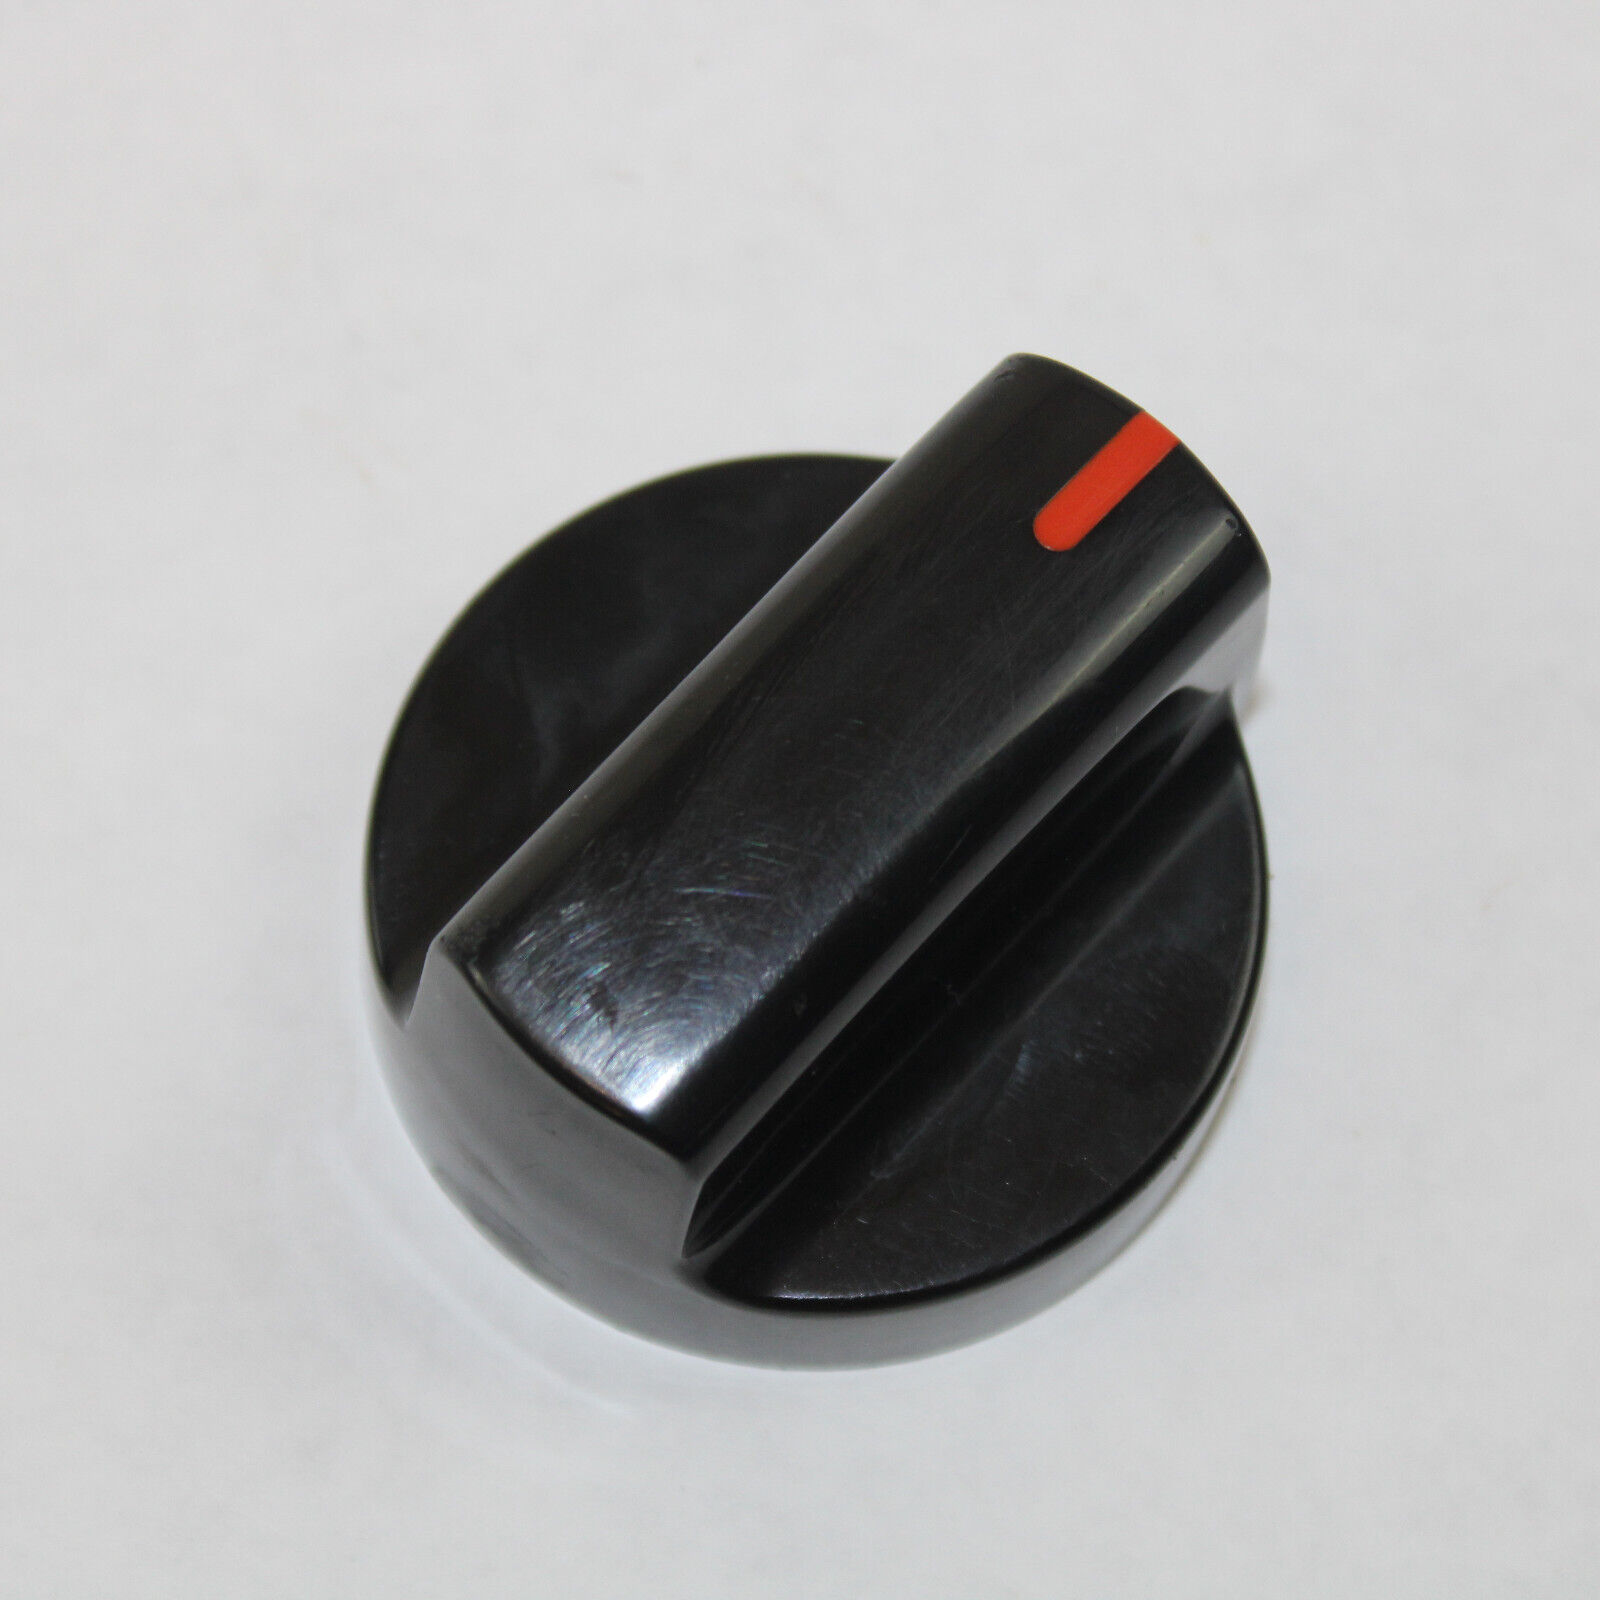 Frigidaire Range Control Knob – Black. Part #5304508956